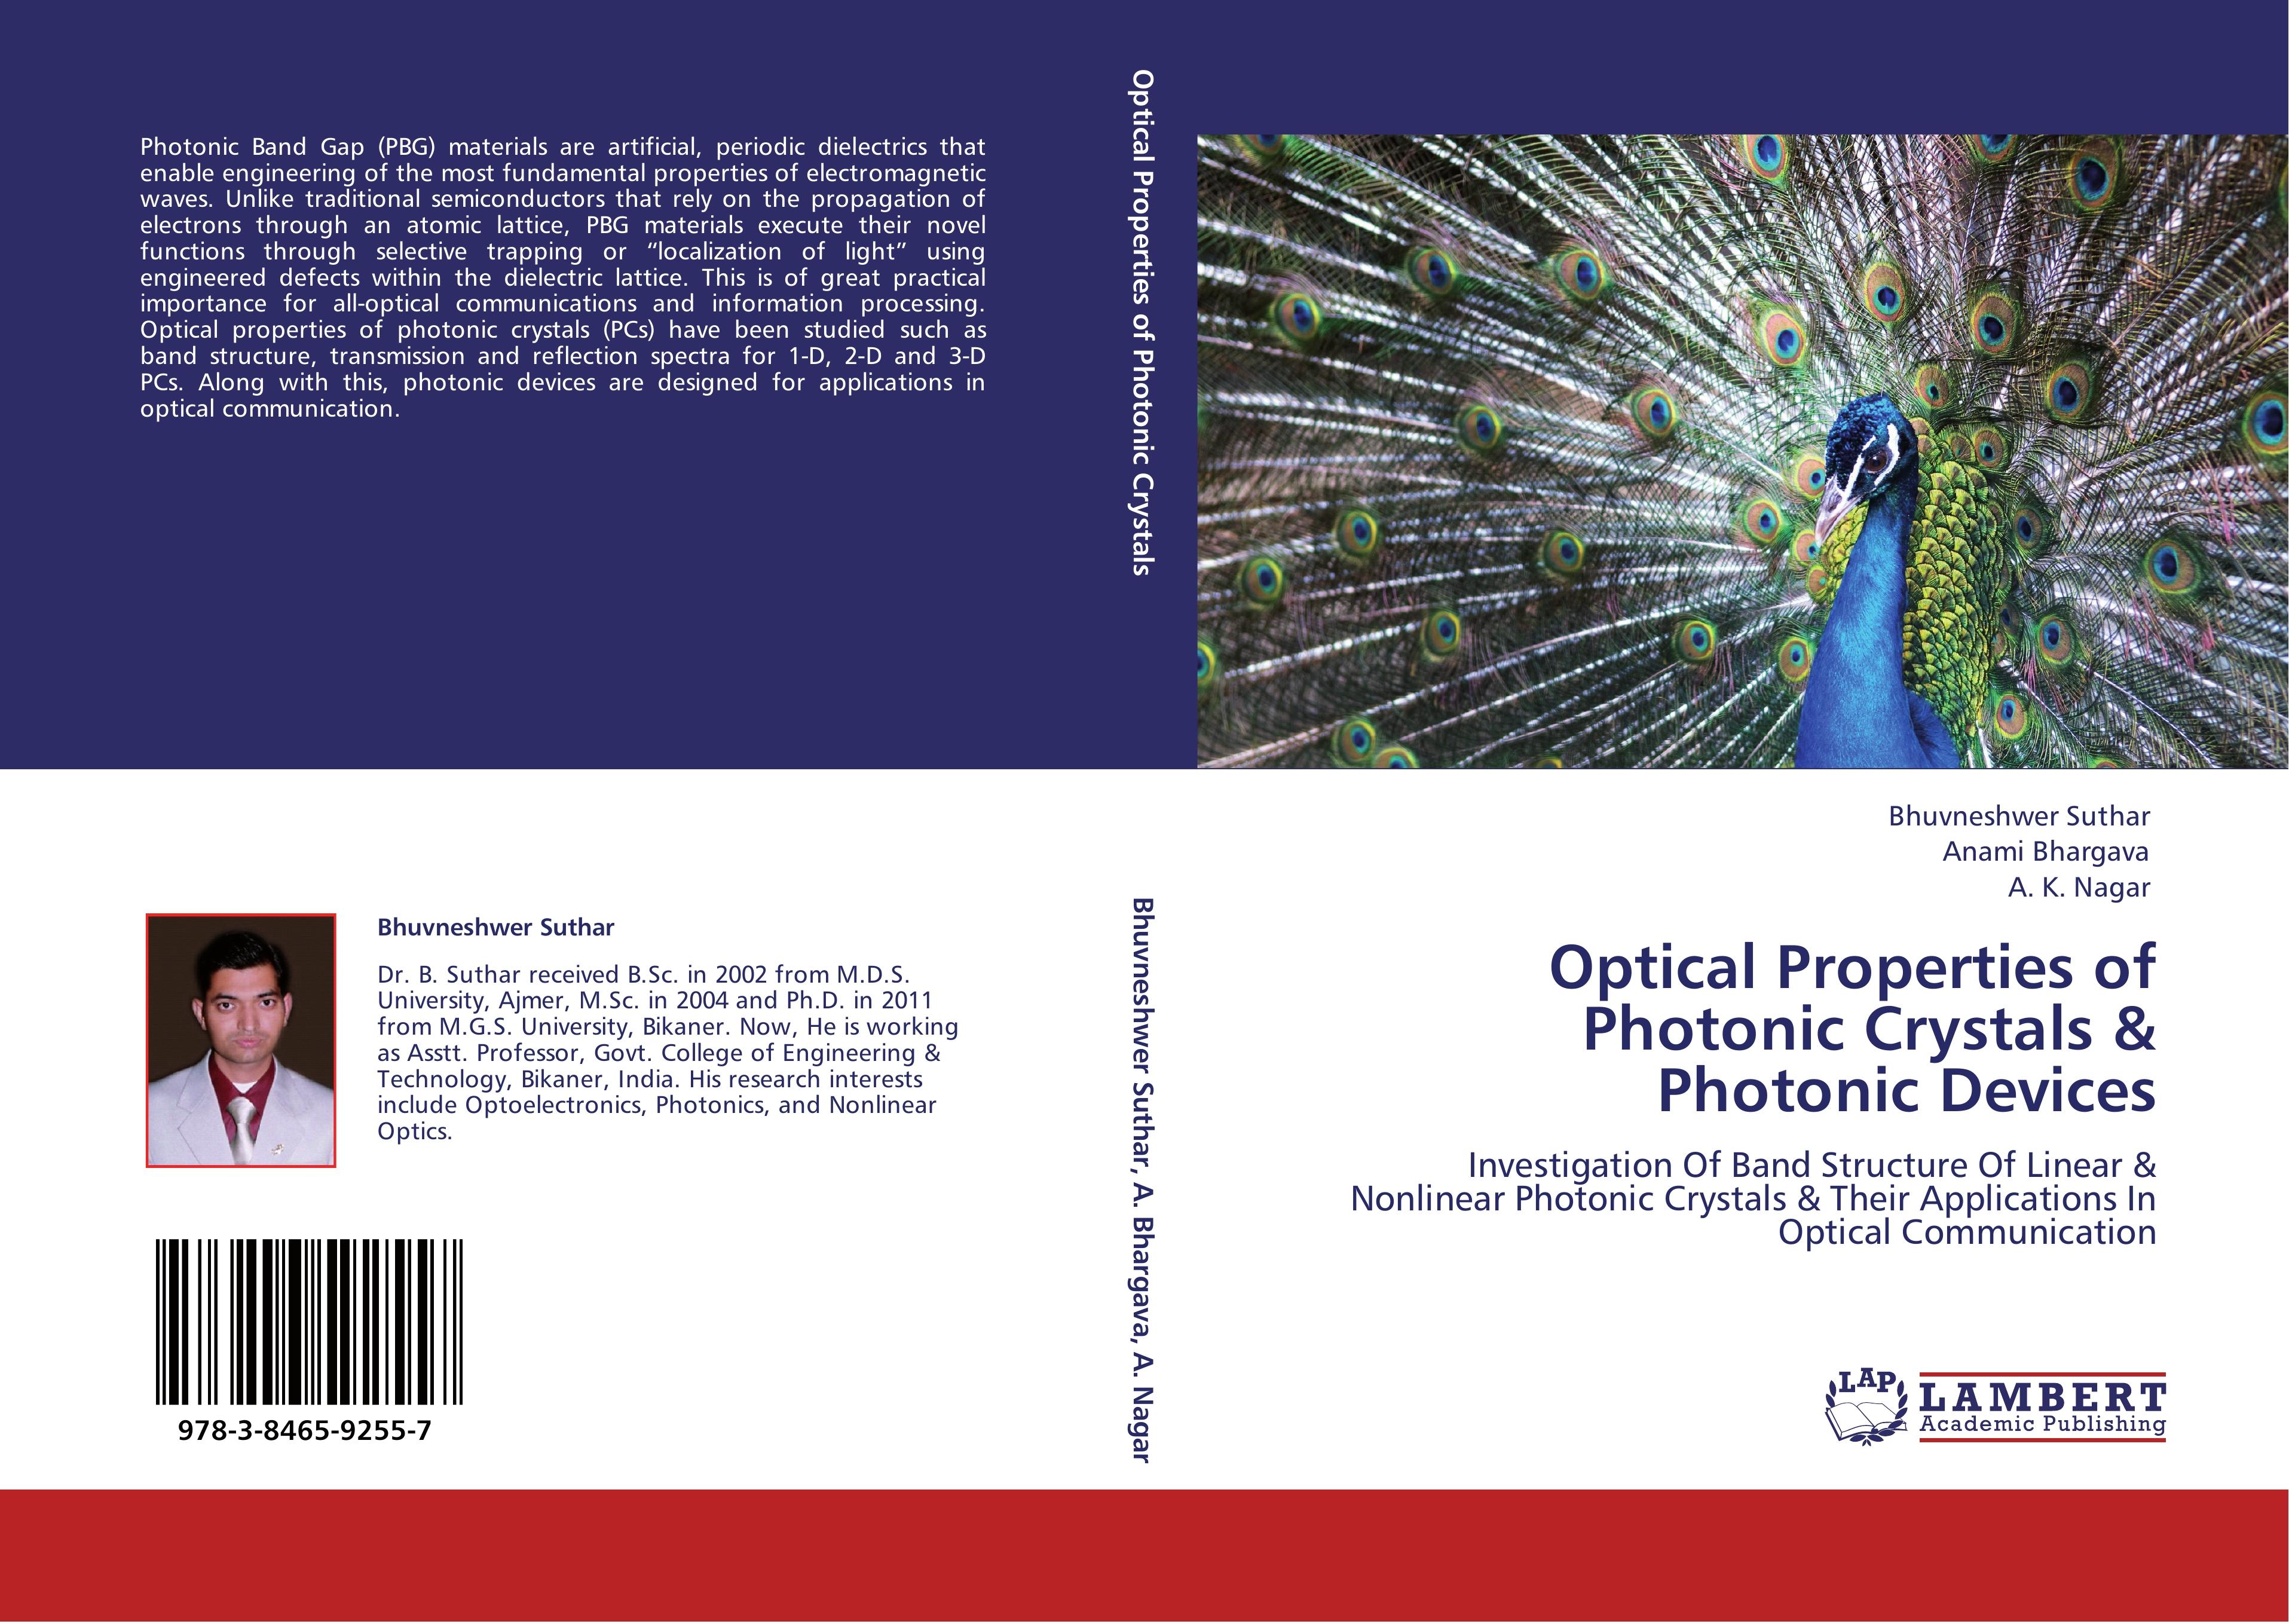 Optical Properties of Photonic Crystals & Photonic Devices - Bhuvneshwer Suthar Anami Bhargava A. K. Nagar